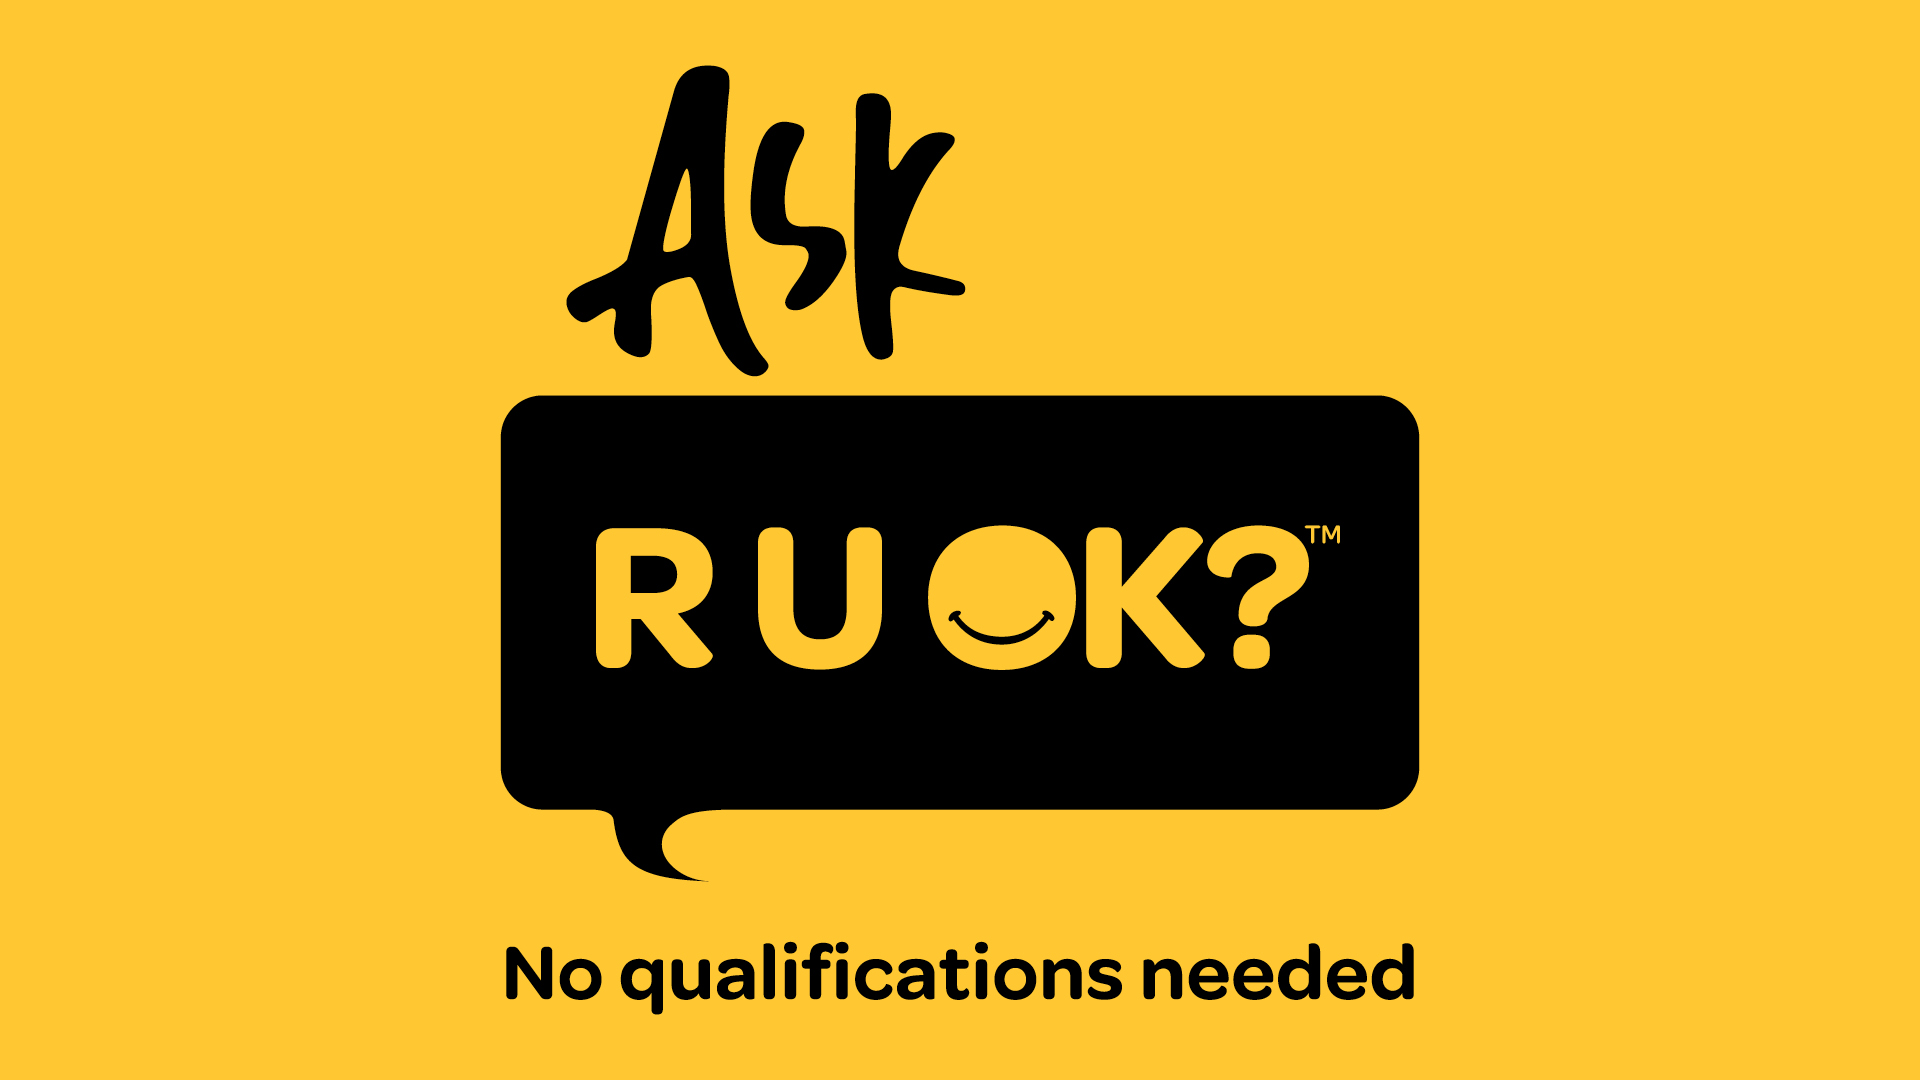 Ask R U OK? No qualifications needed.